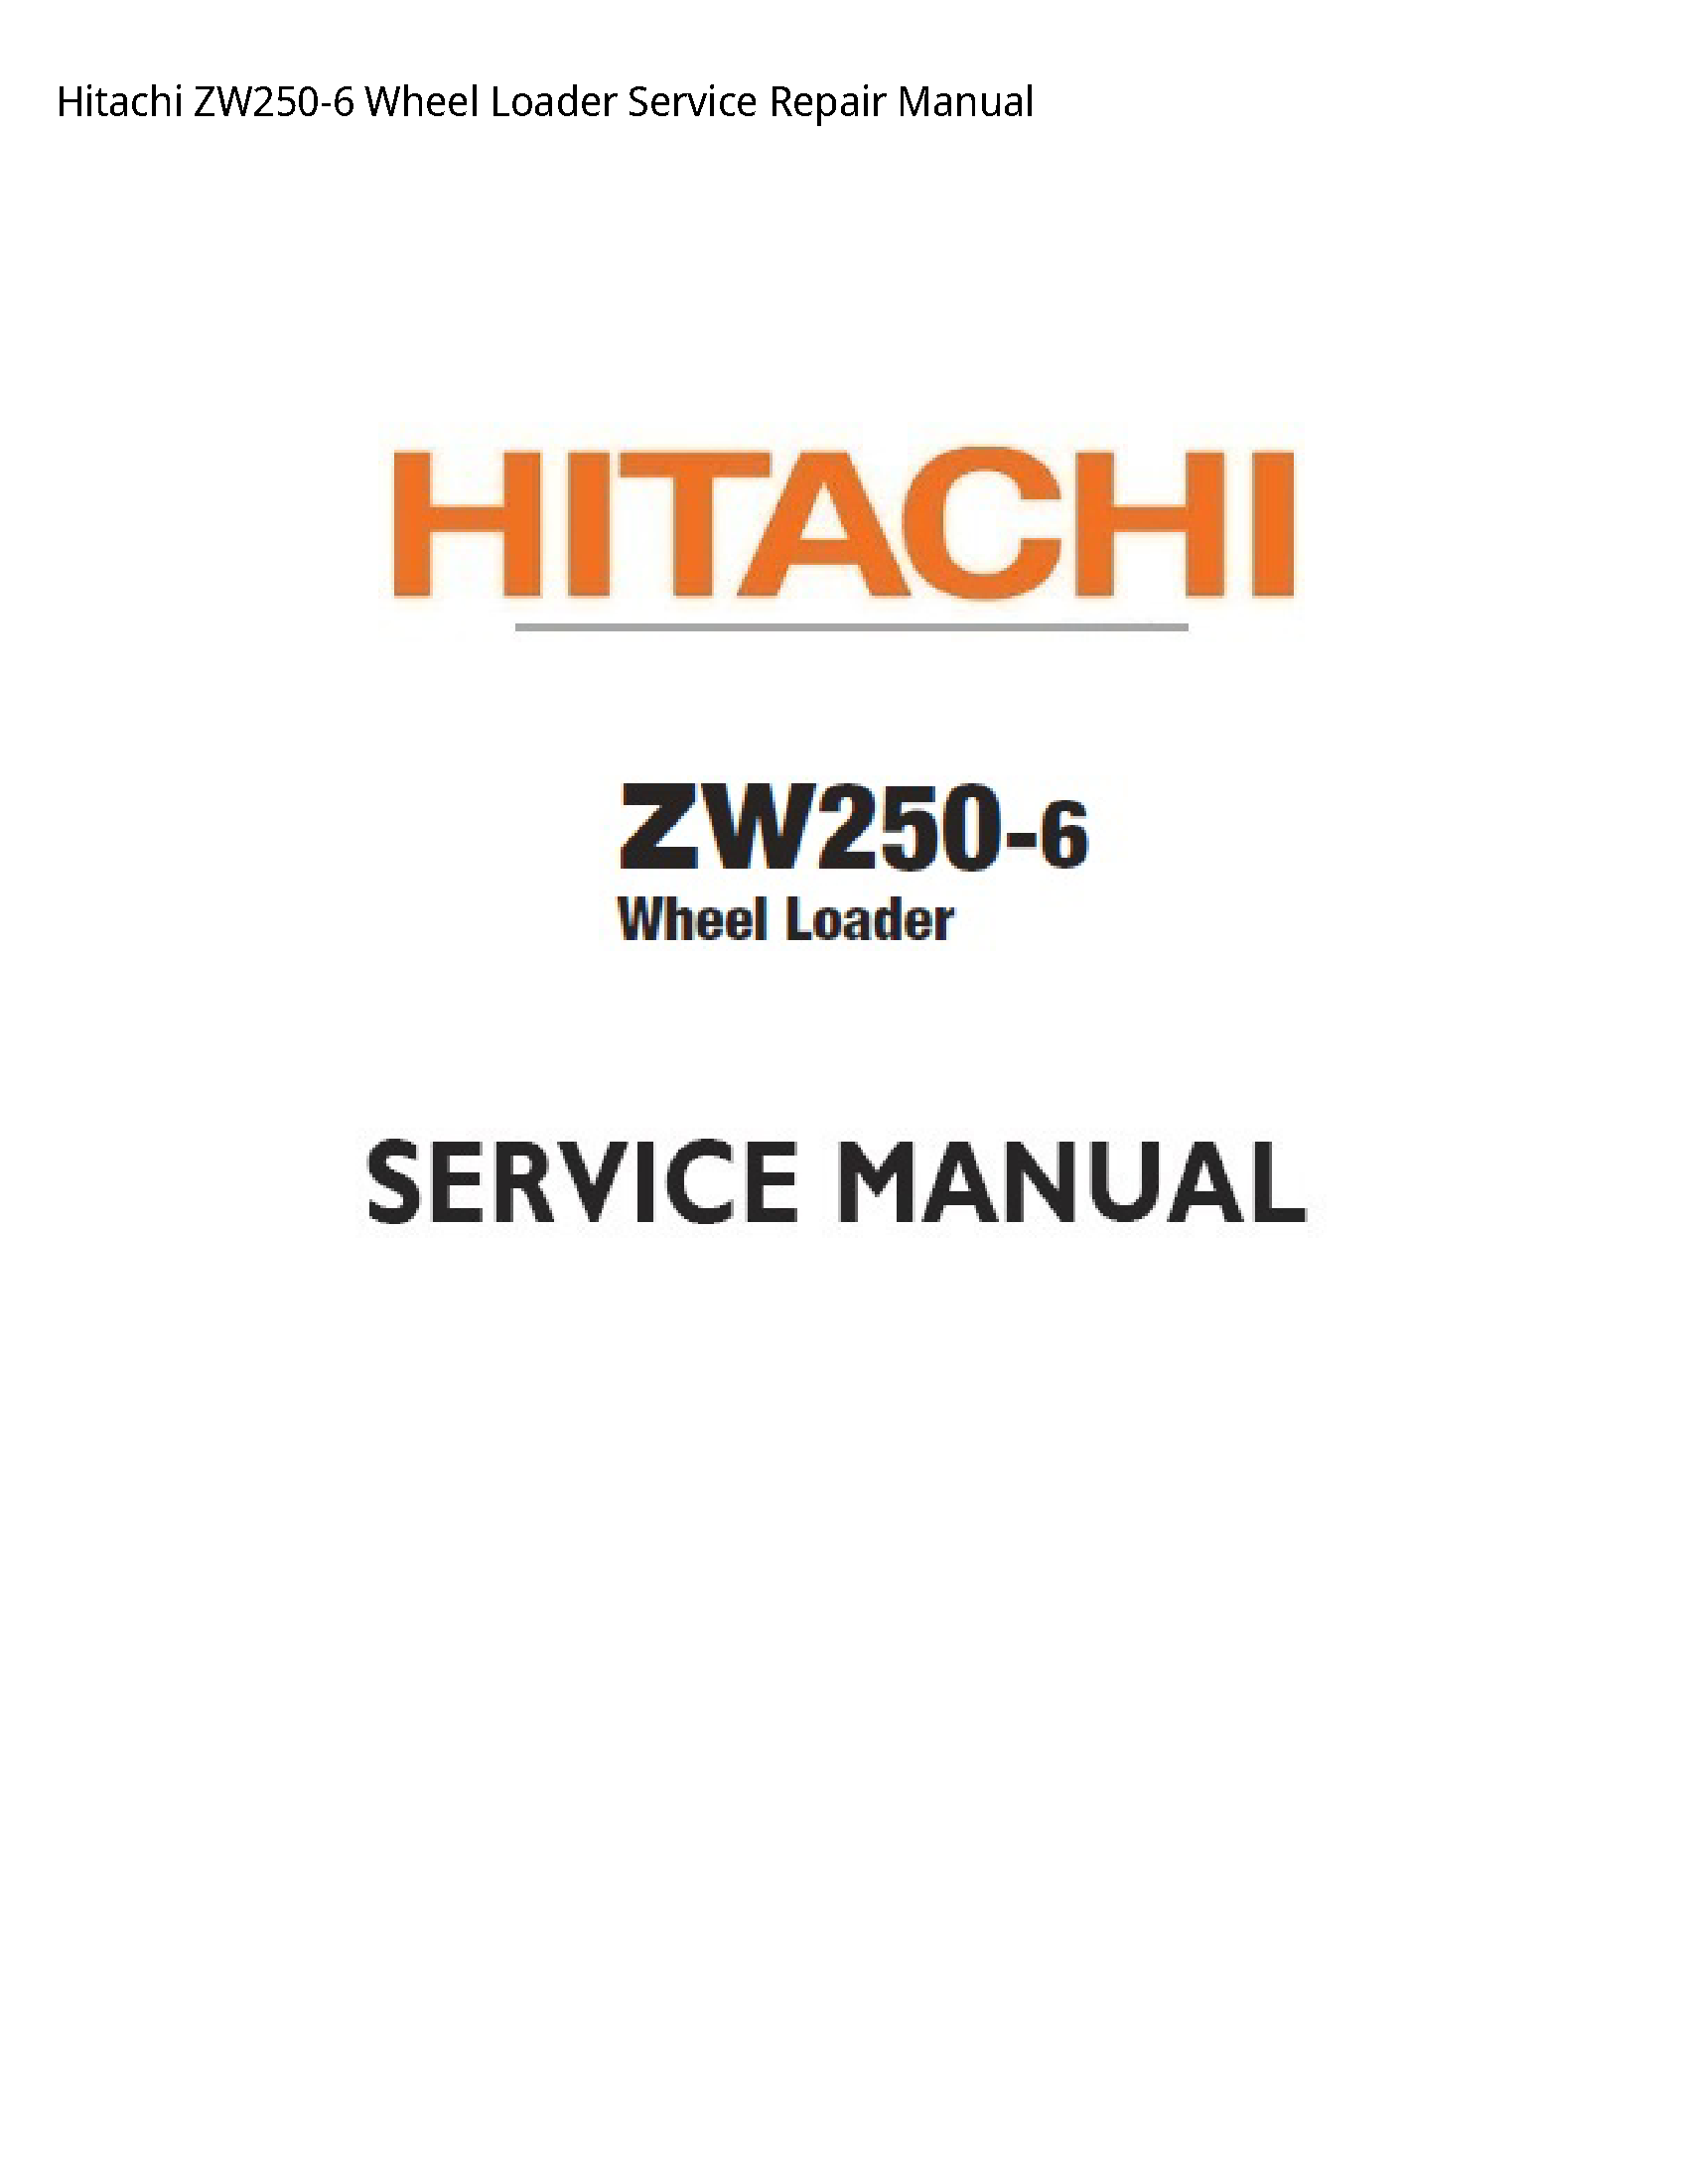 Hitachi ZW250-6 Wheel Loader manual